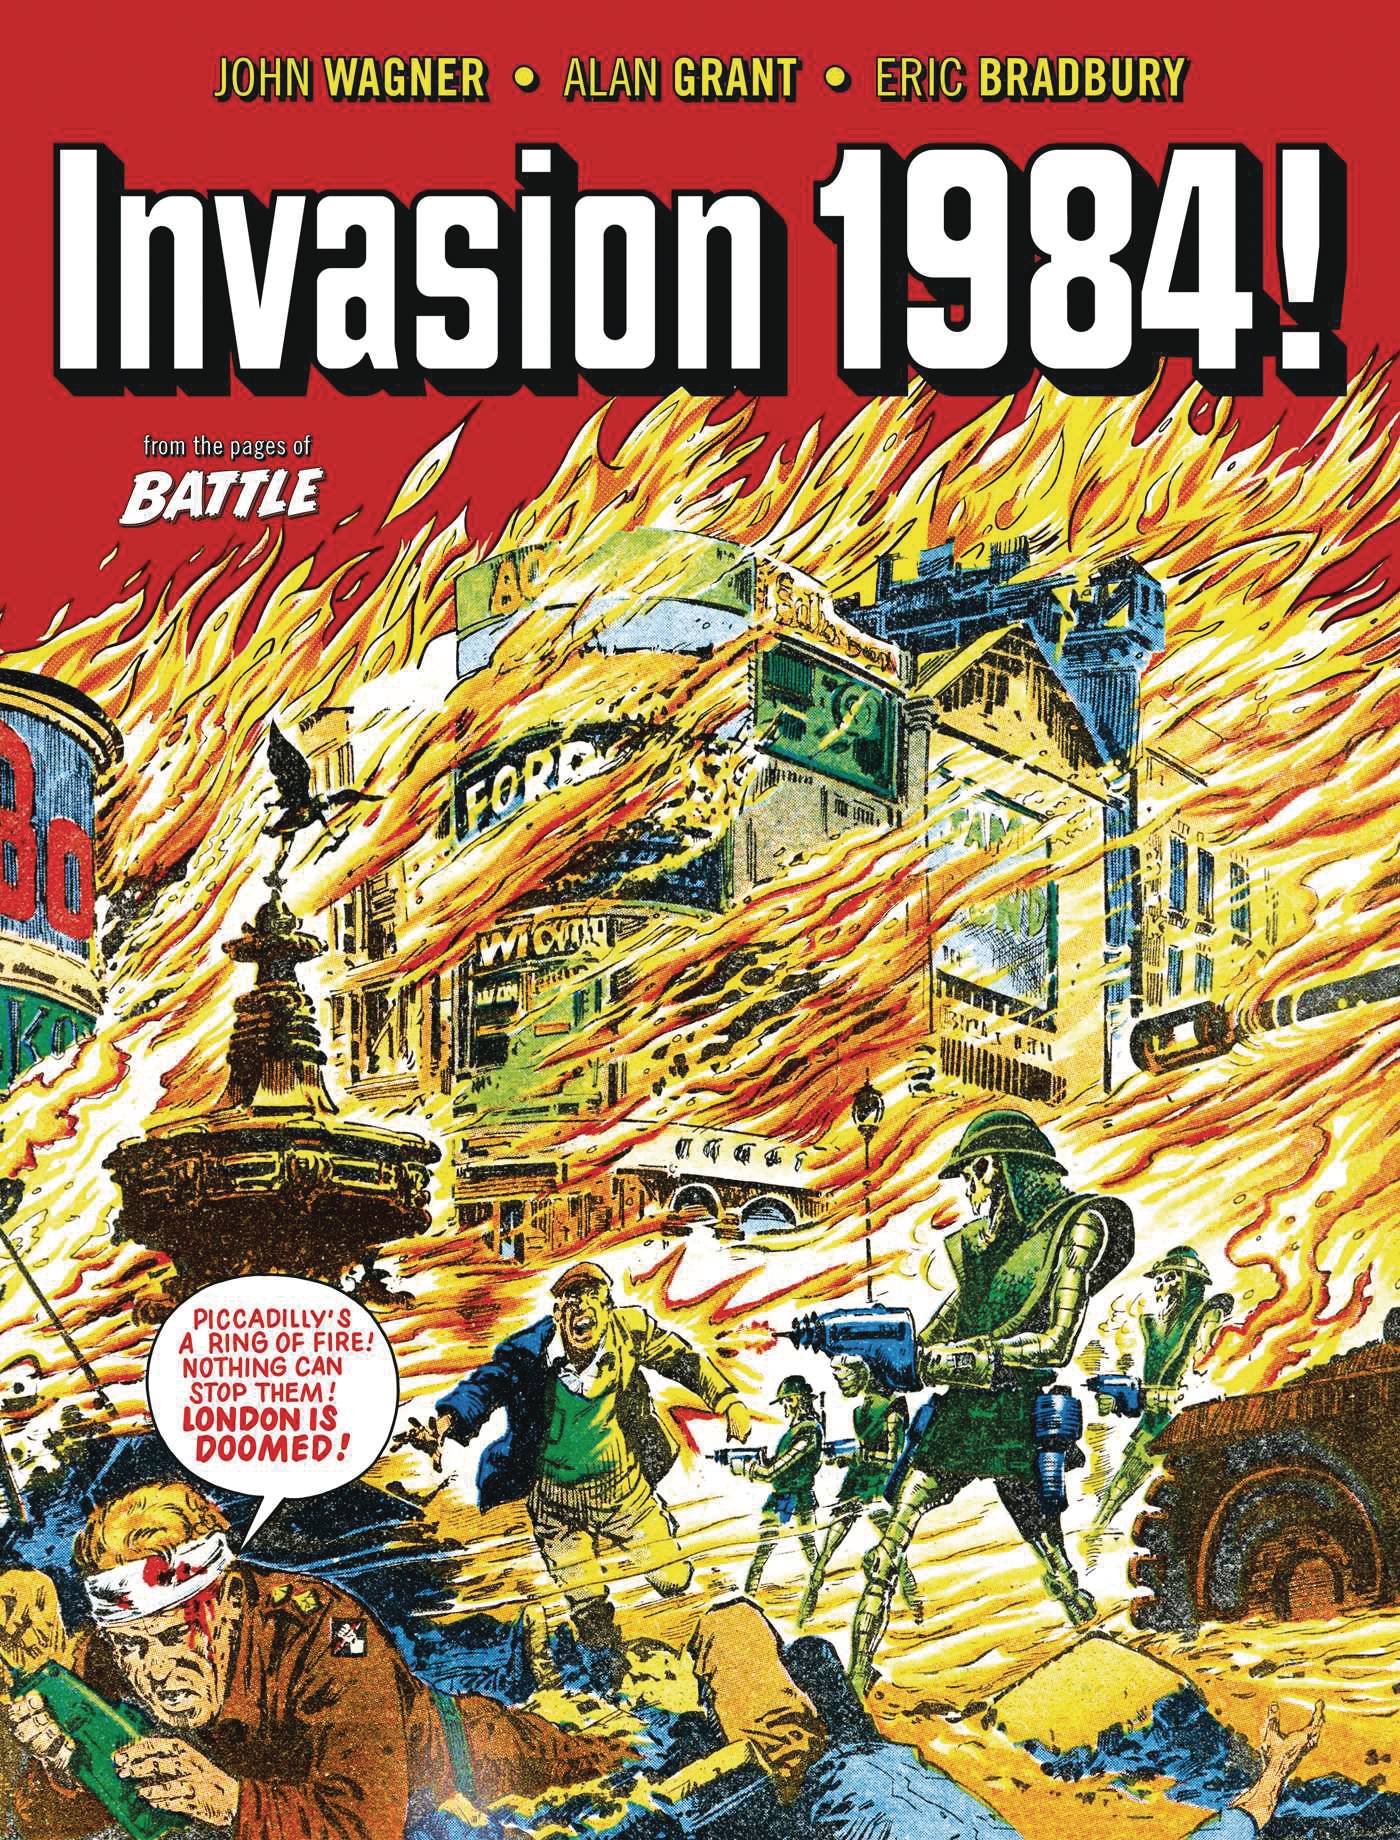 Invasion 1984 Graphic Novel